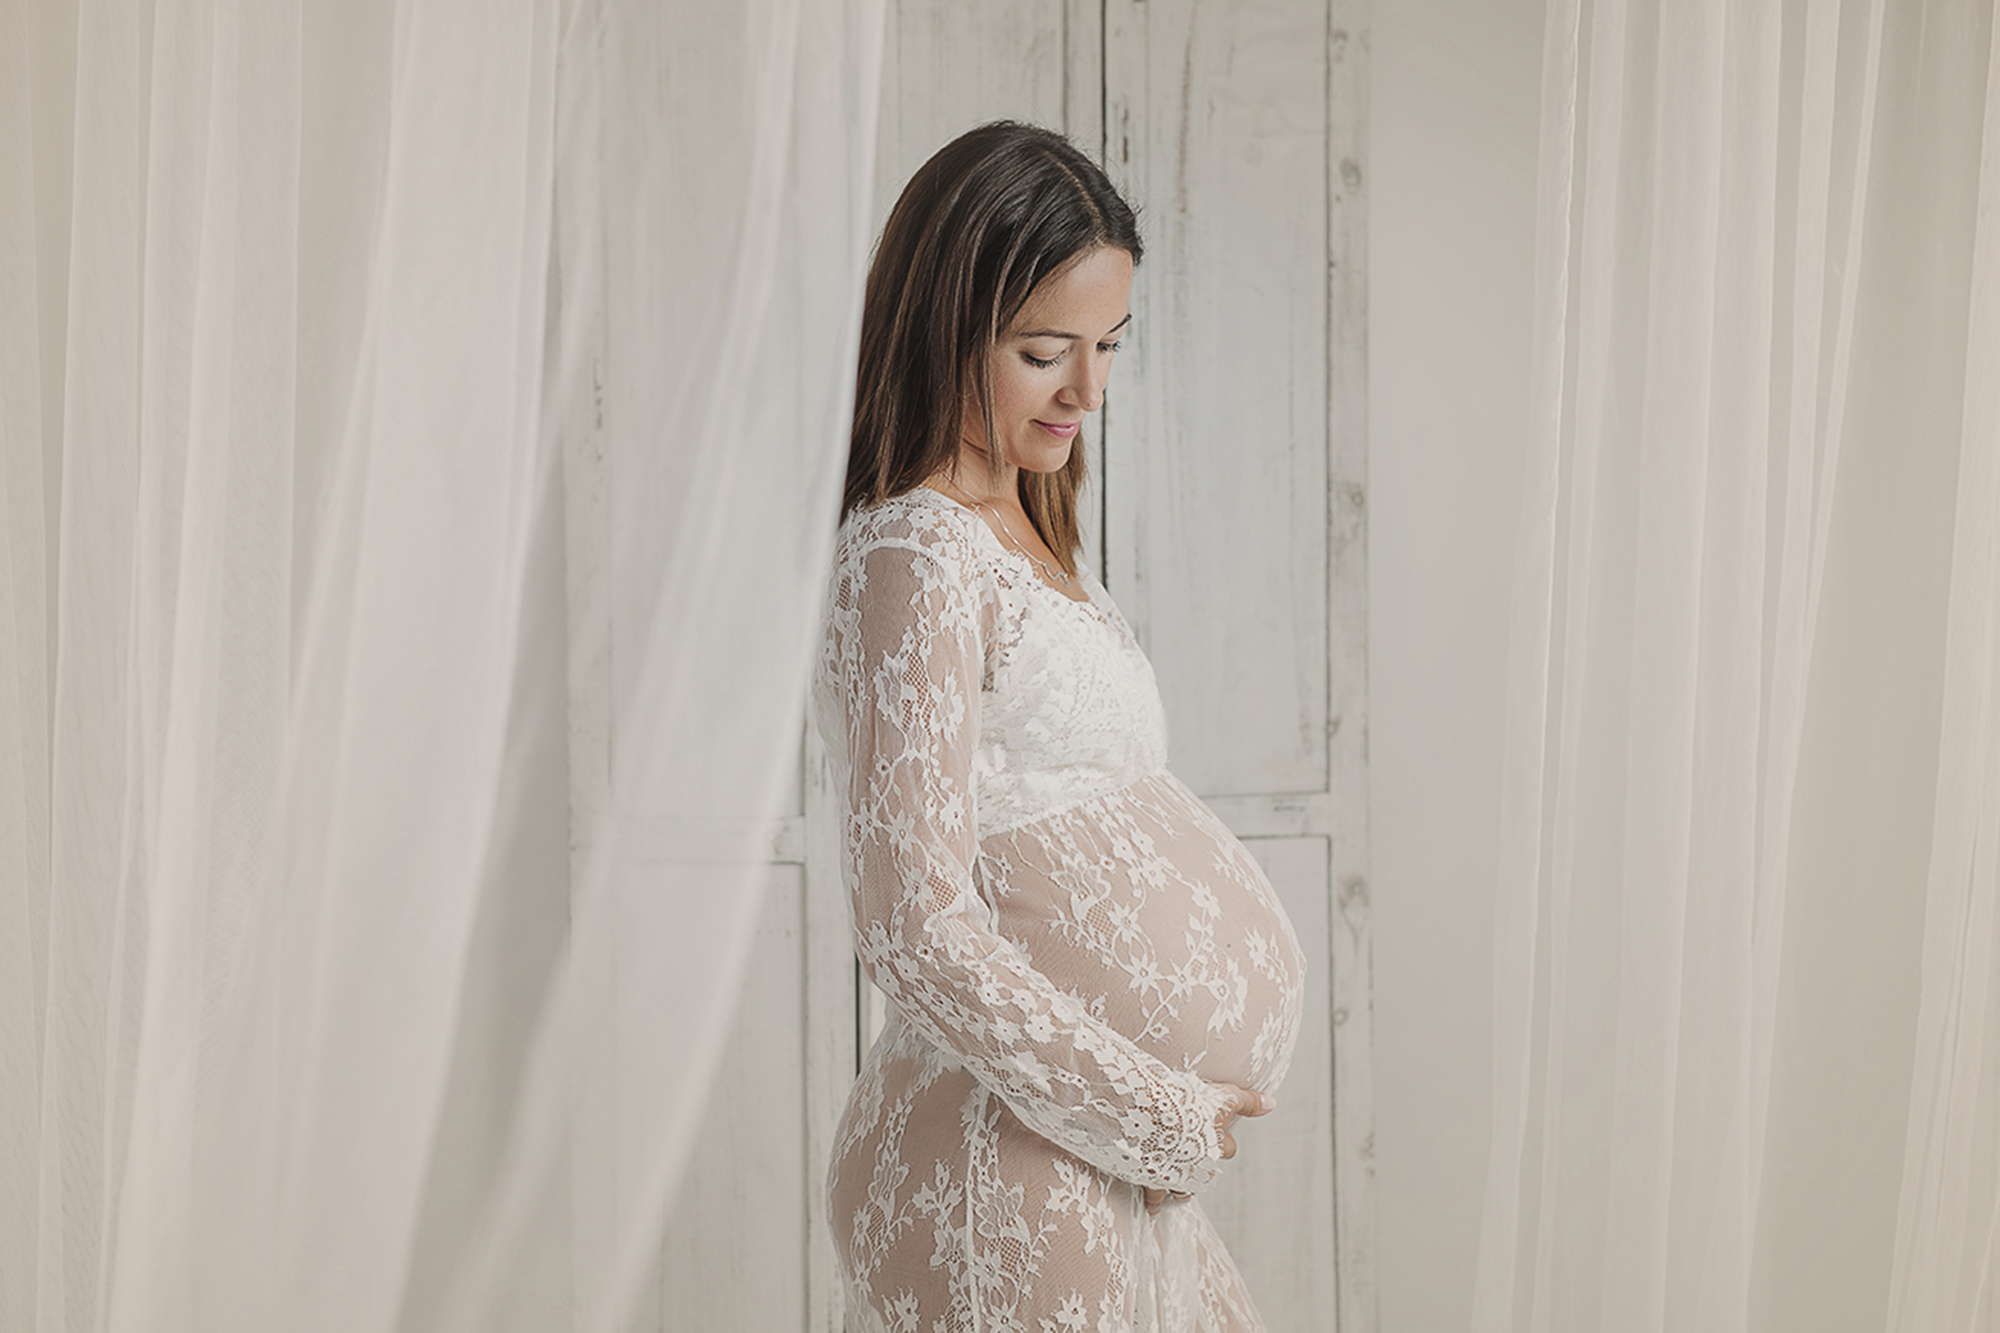 larga espera, embarazo de 9 meses, sesión de embarazo es estudio en zaragoza, sesión de embarazo en exterior en zaragoza, foto de embarazo de familia